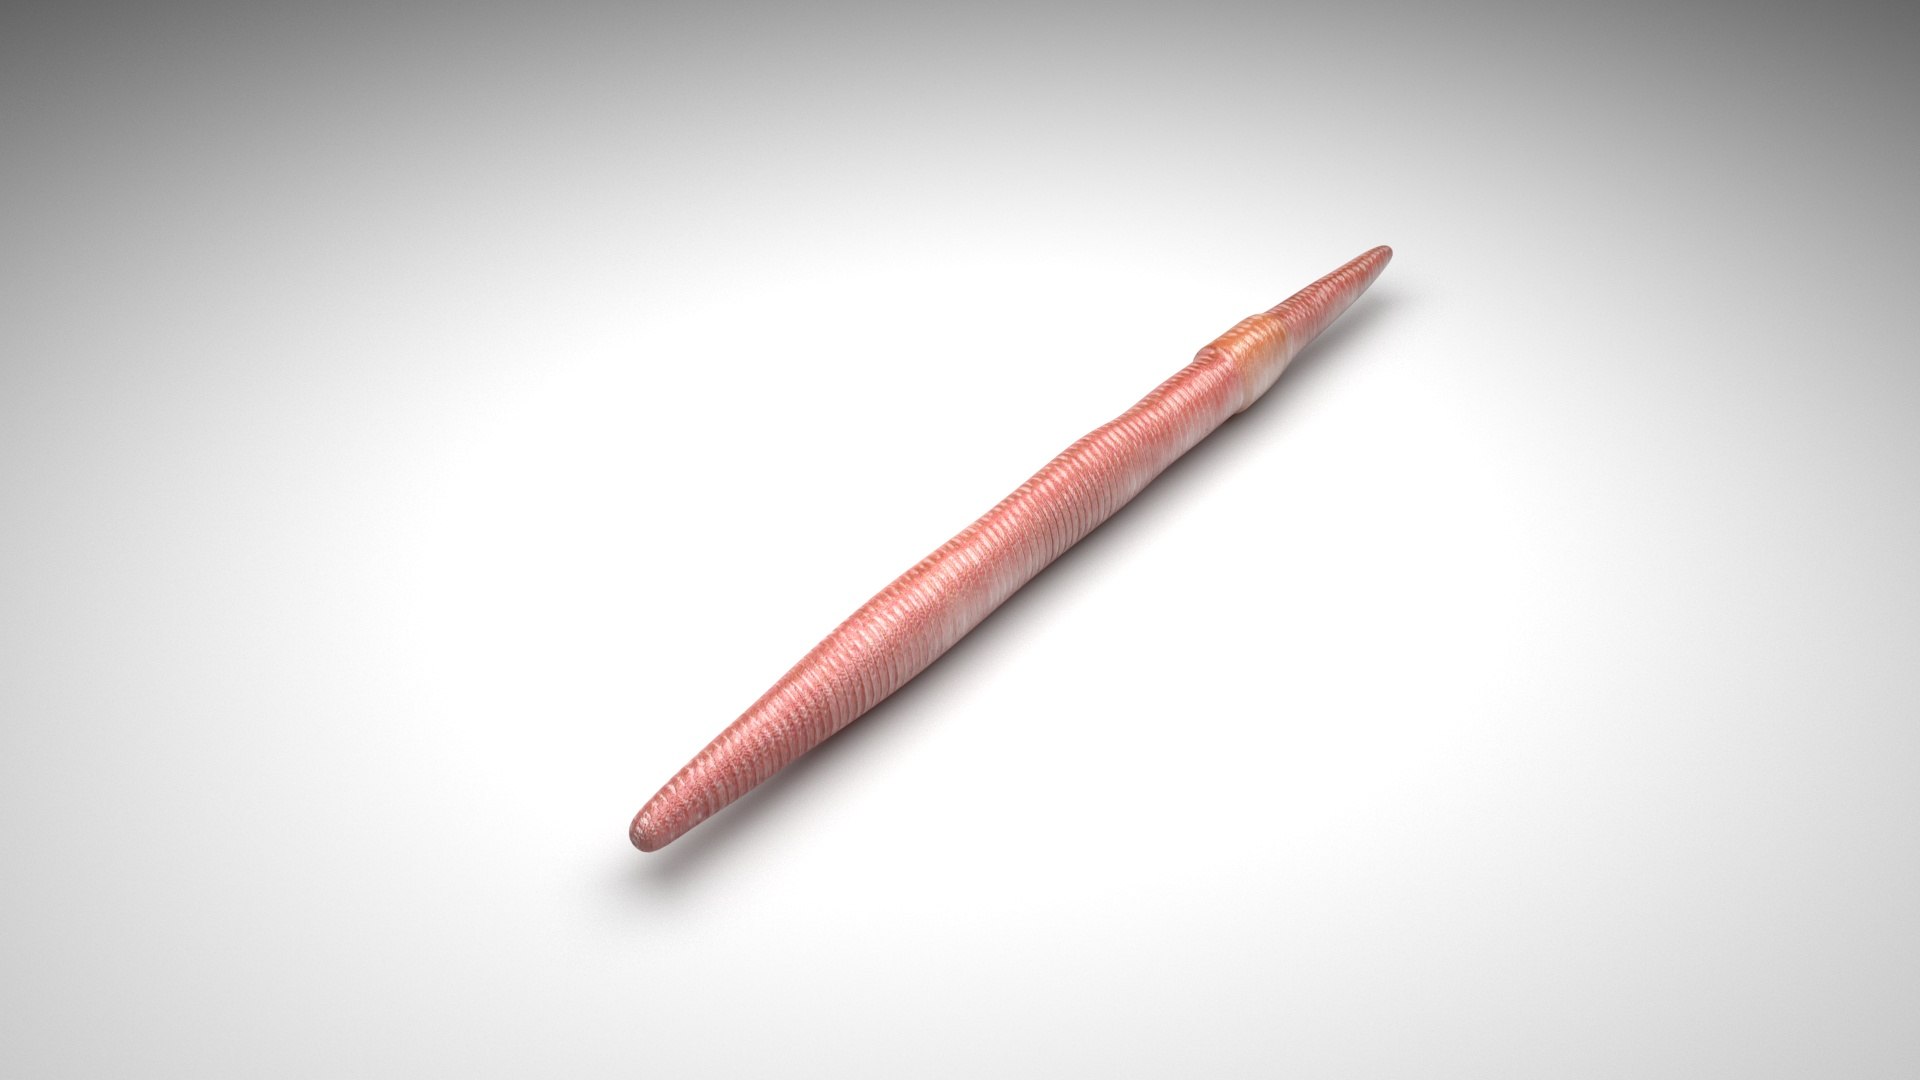 Straight Earthworm 3D Model - TurboSquid 1841825